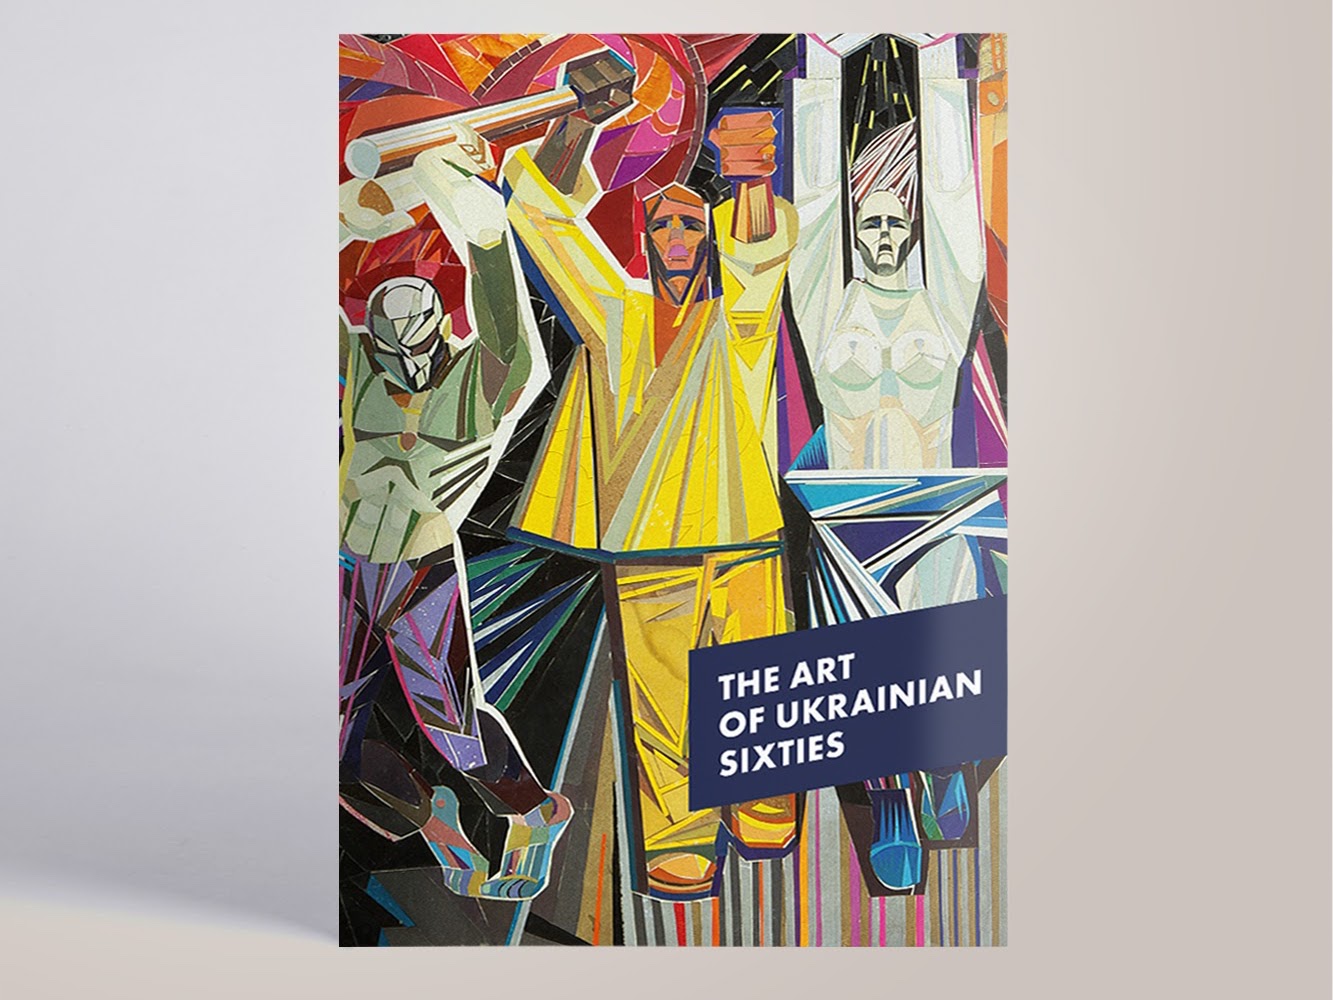 A new book celebrates the daring Ukrainian avant-garde art of the 1960s